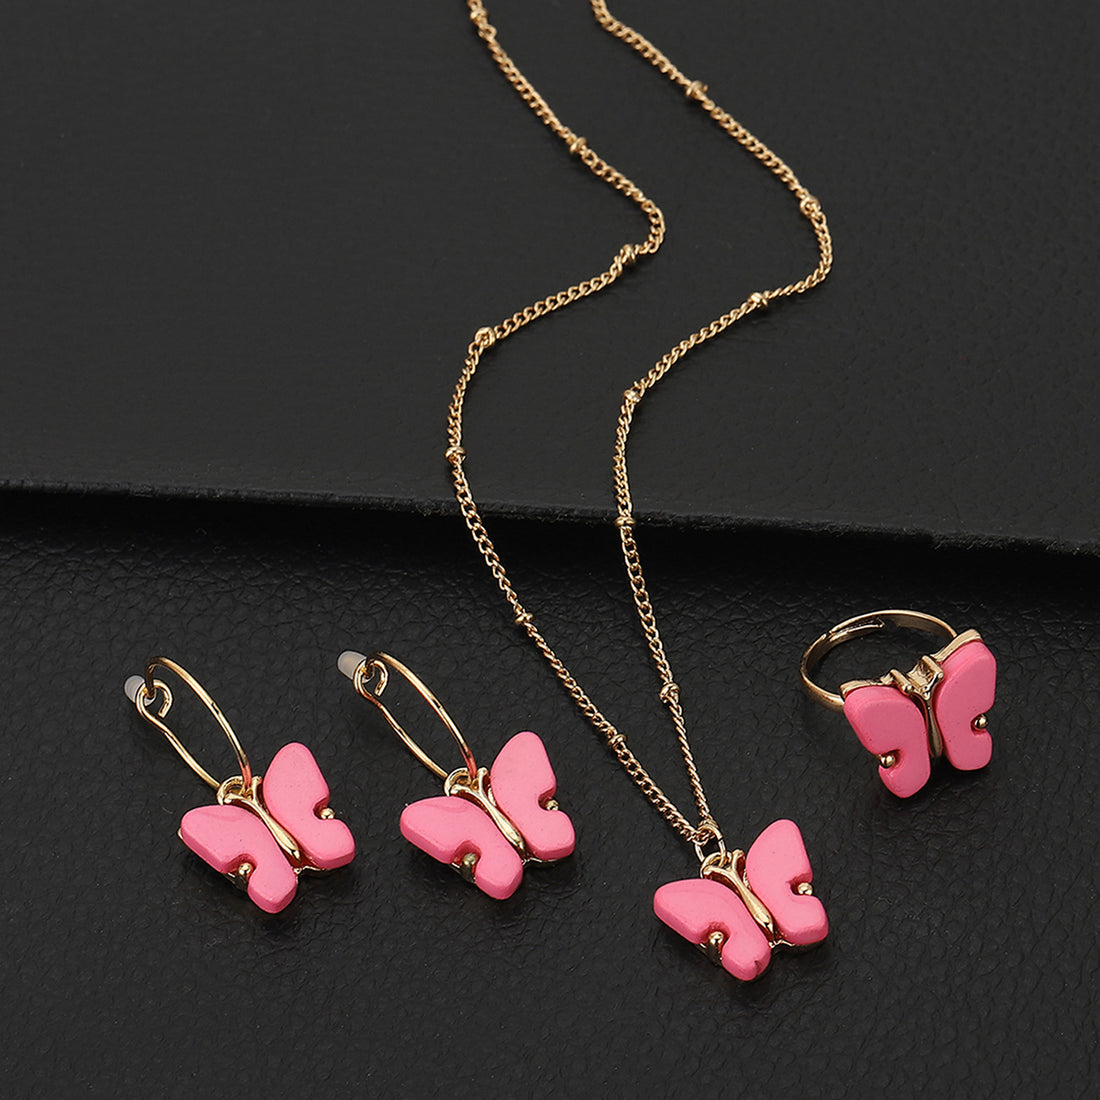 Carlton London Girls Gold-Plated Pink Jewellery Set Kjs045